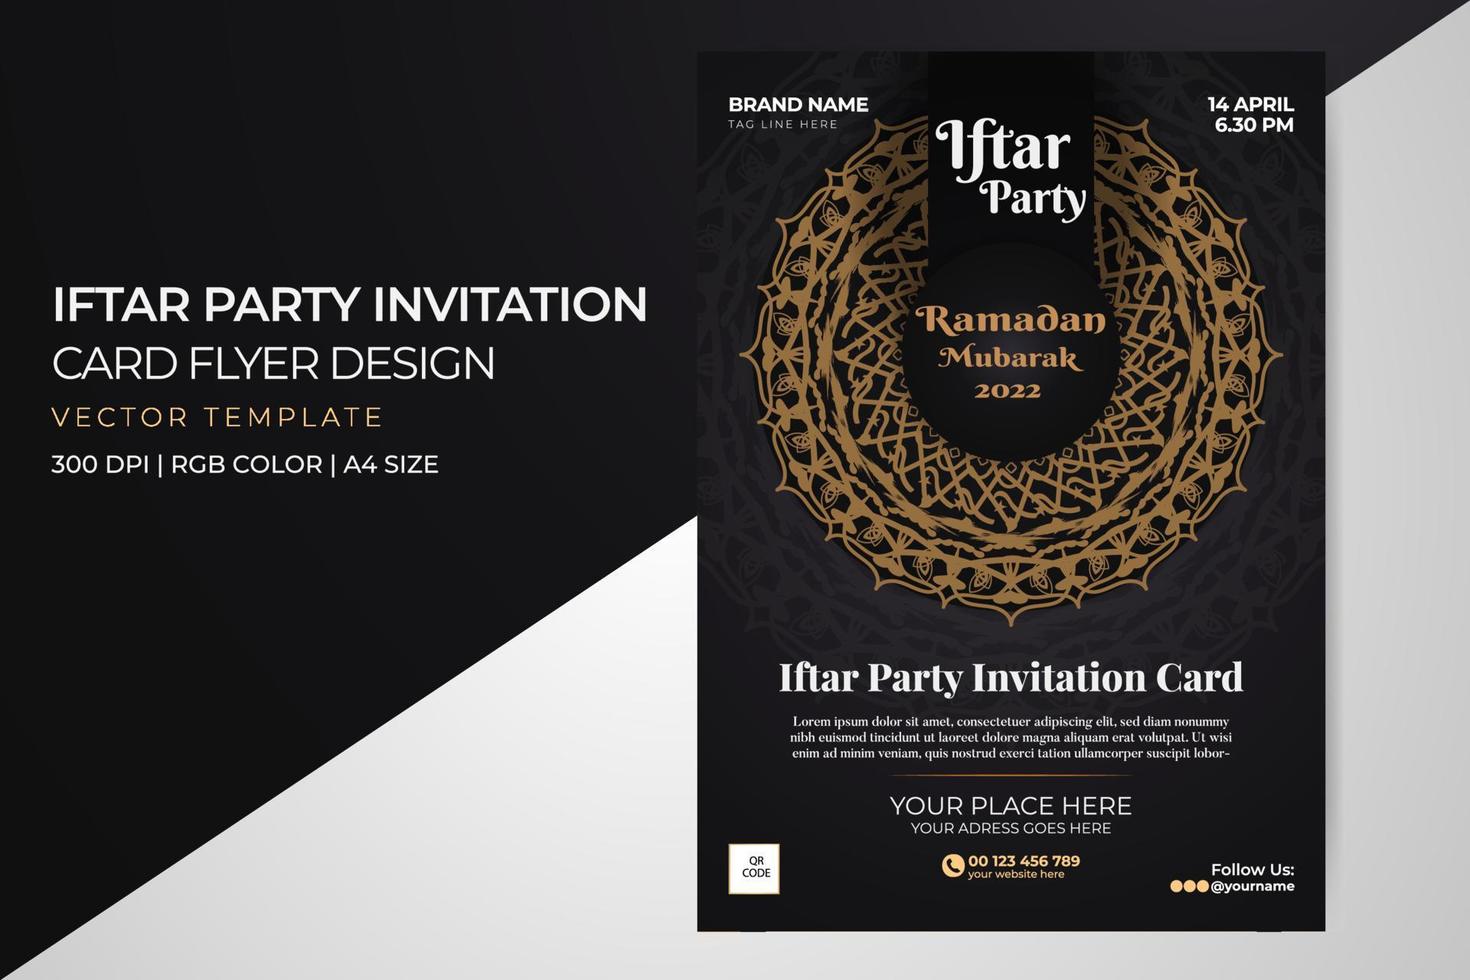 Ramadan Kareem Mubarak Iftar Party Flyer Invitation Card Mandala Design Template Free Download vector